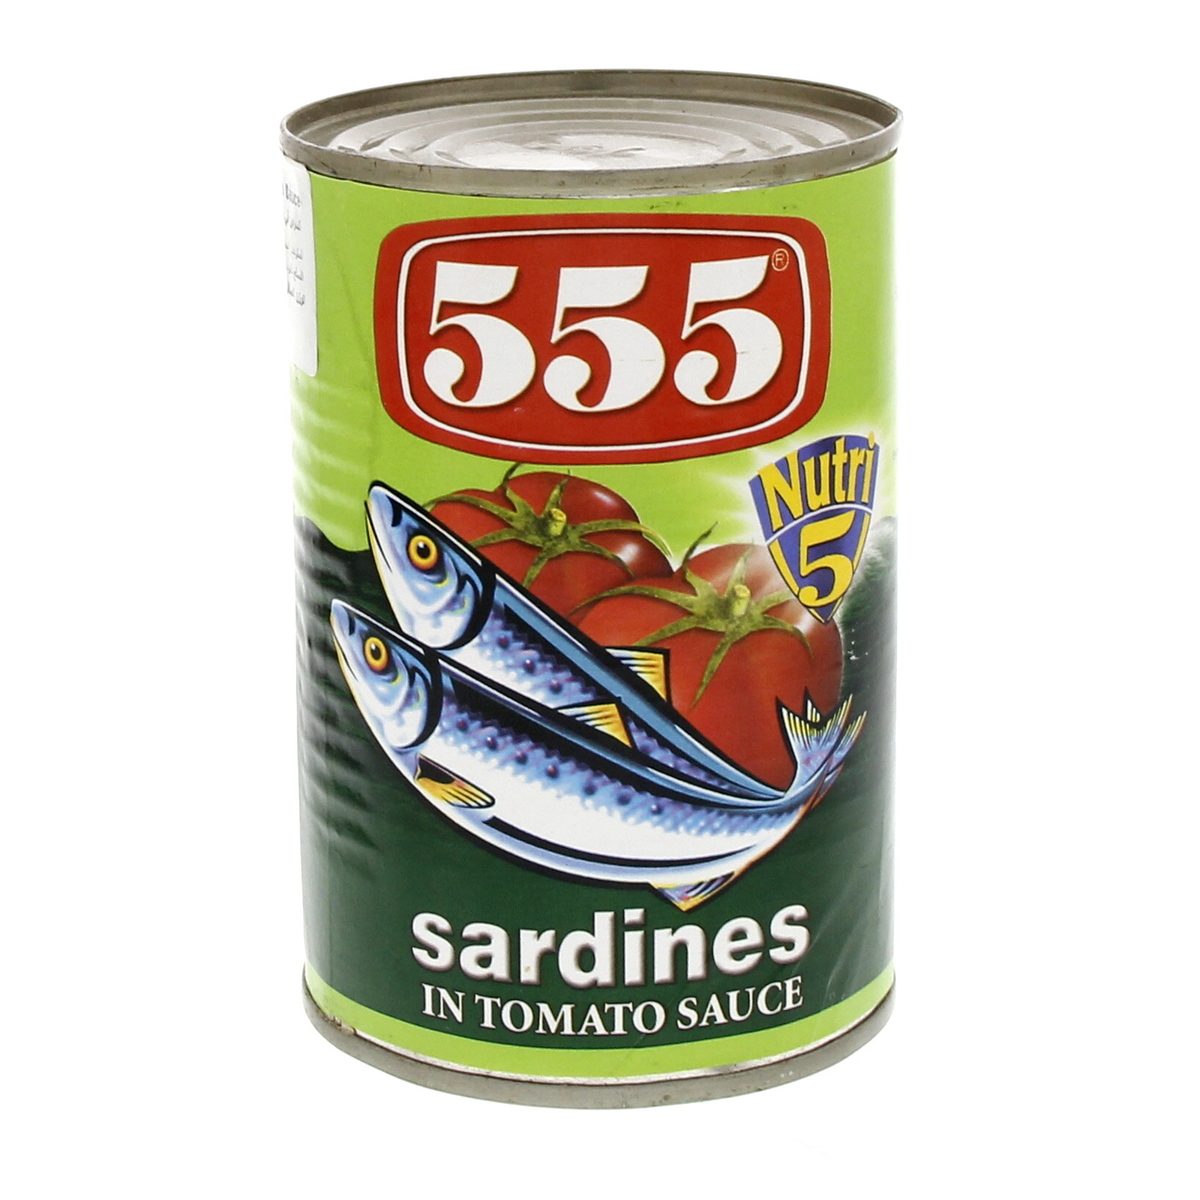 555 -5 Sardines In Tomato Sauce 425g